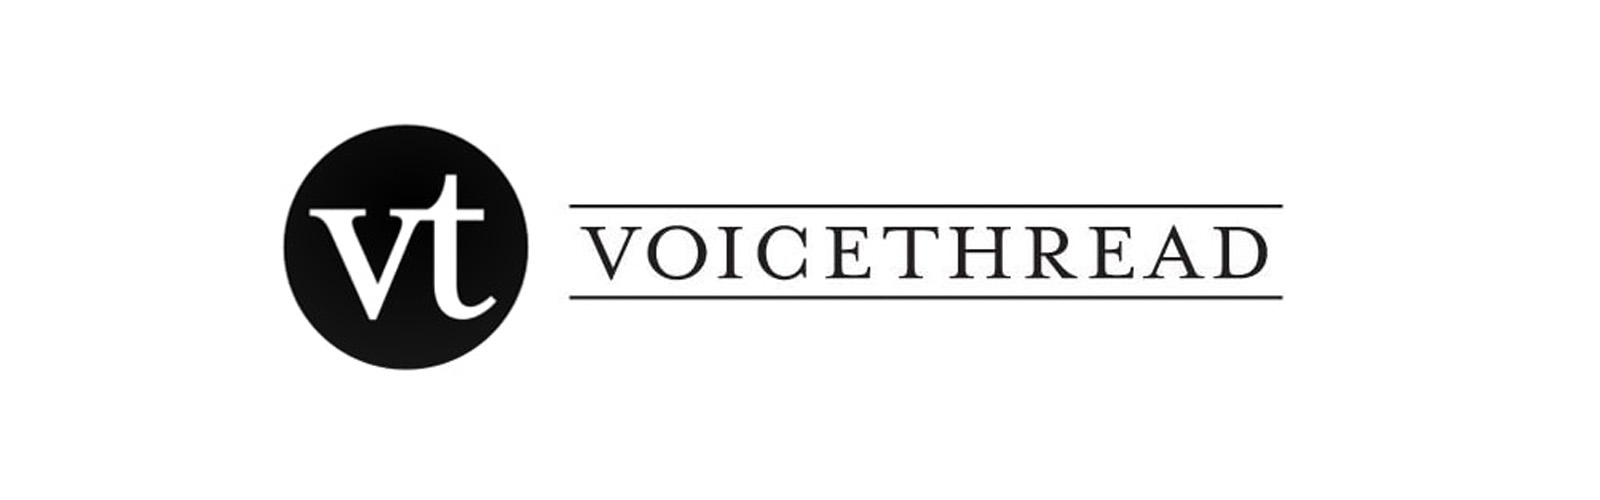 VoiceThread logo.